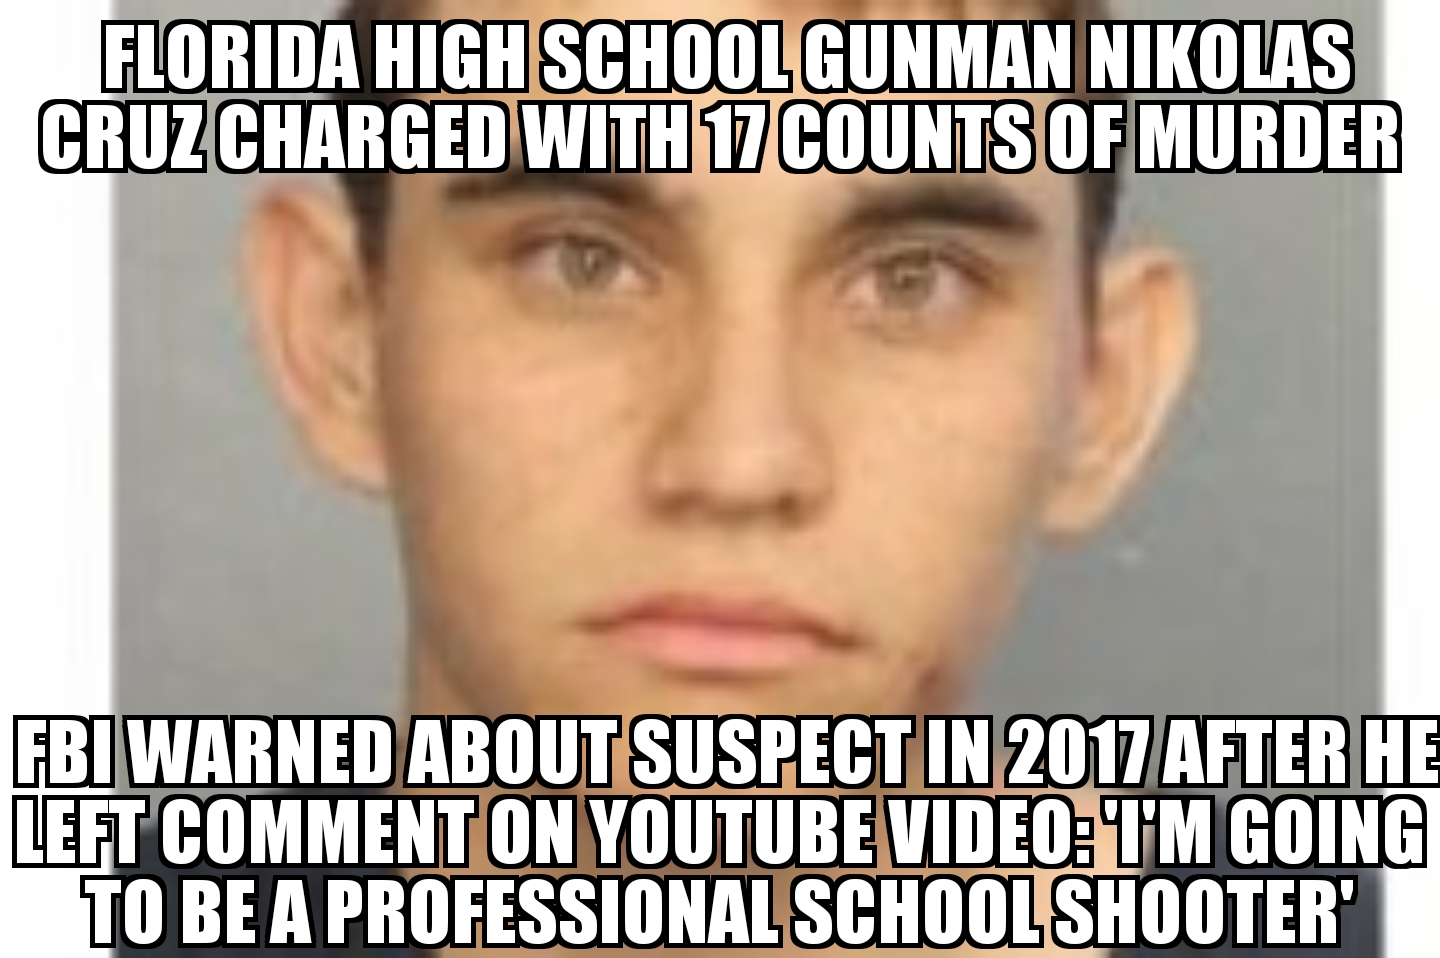 Florida high school shooting